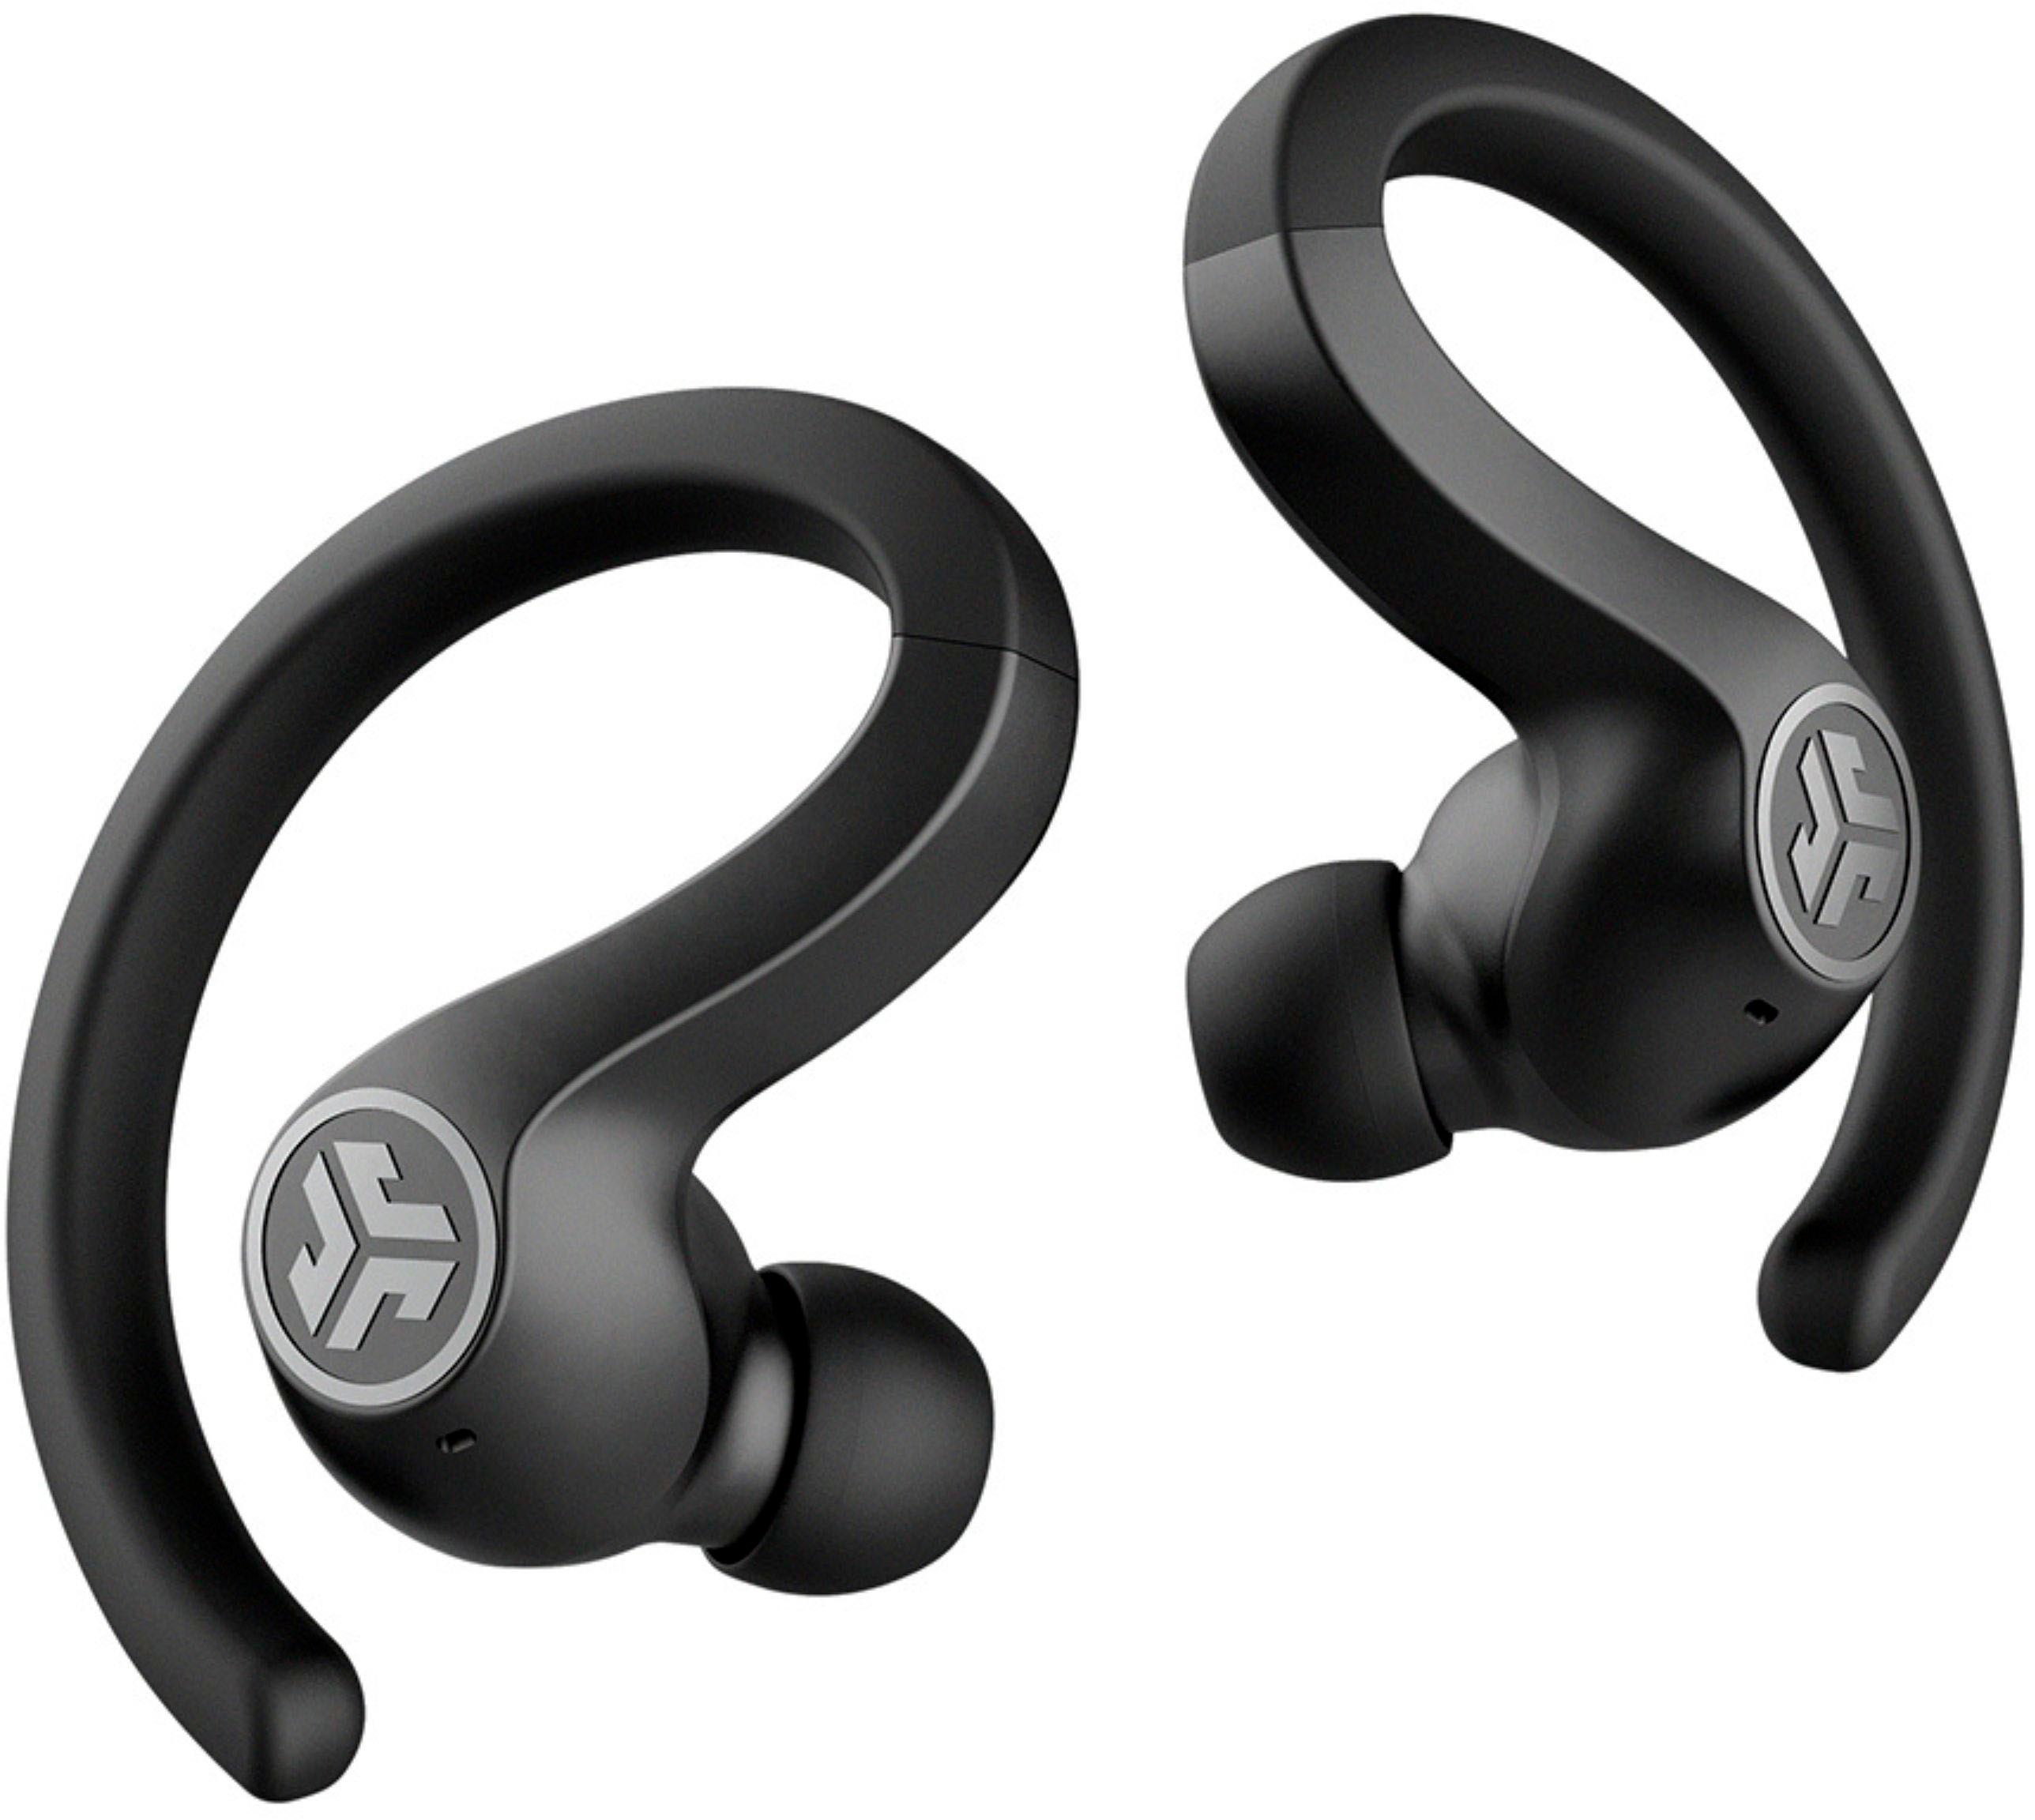 Angle View: JLab - JBuds Air Sport True Wireless In-Ear Headphones - Black